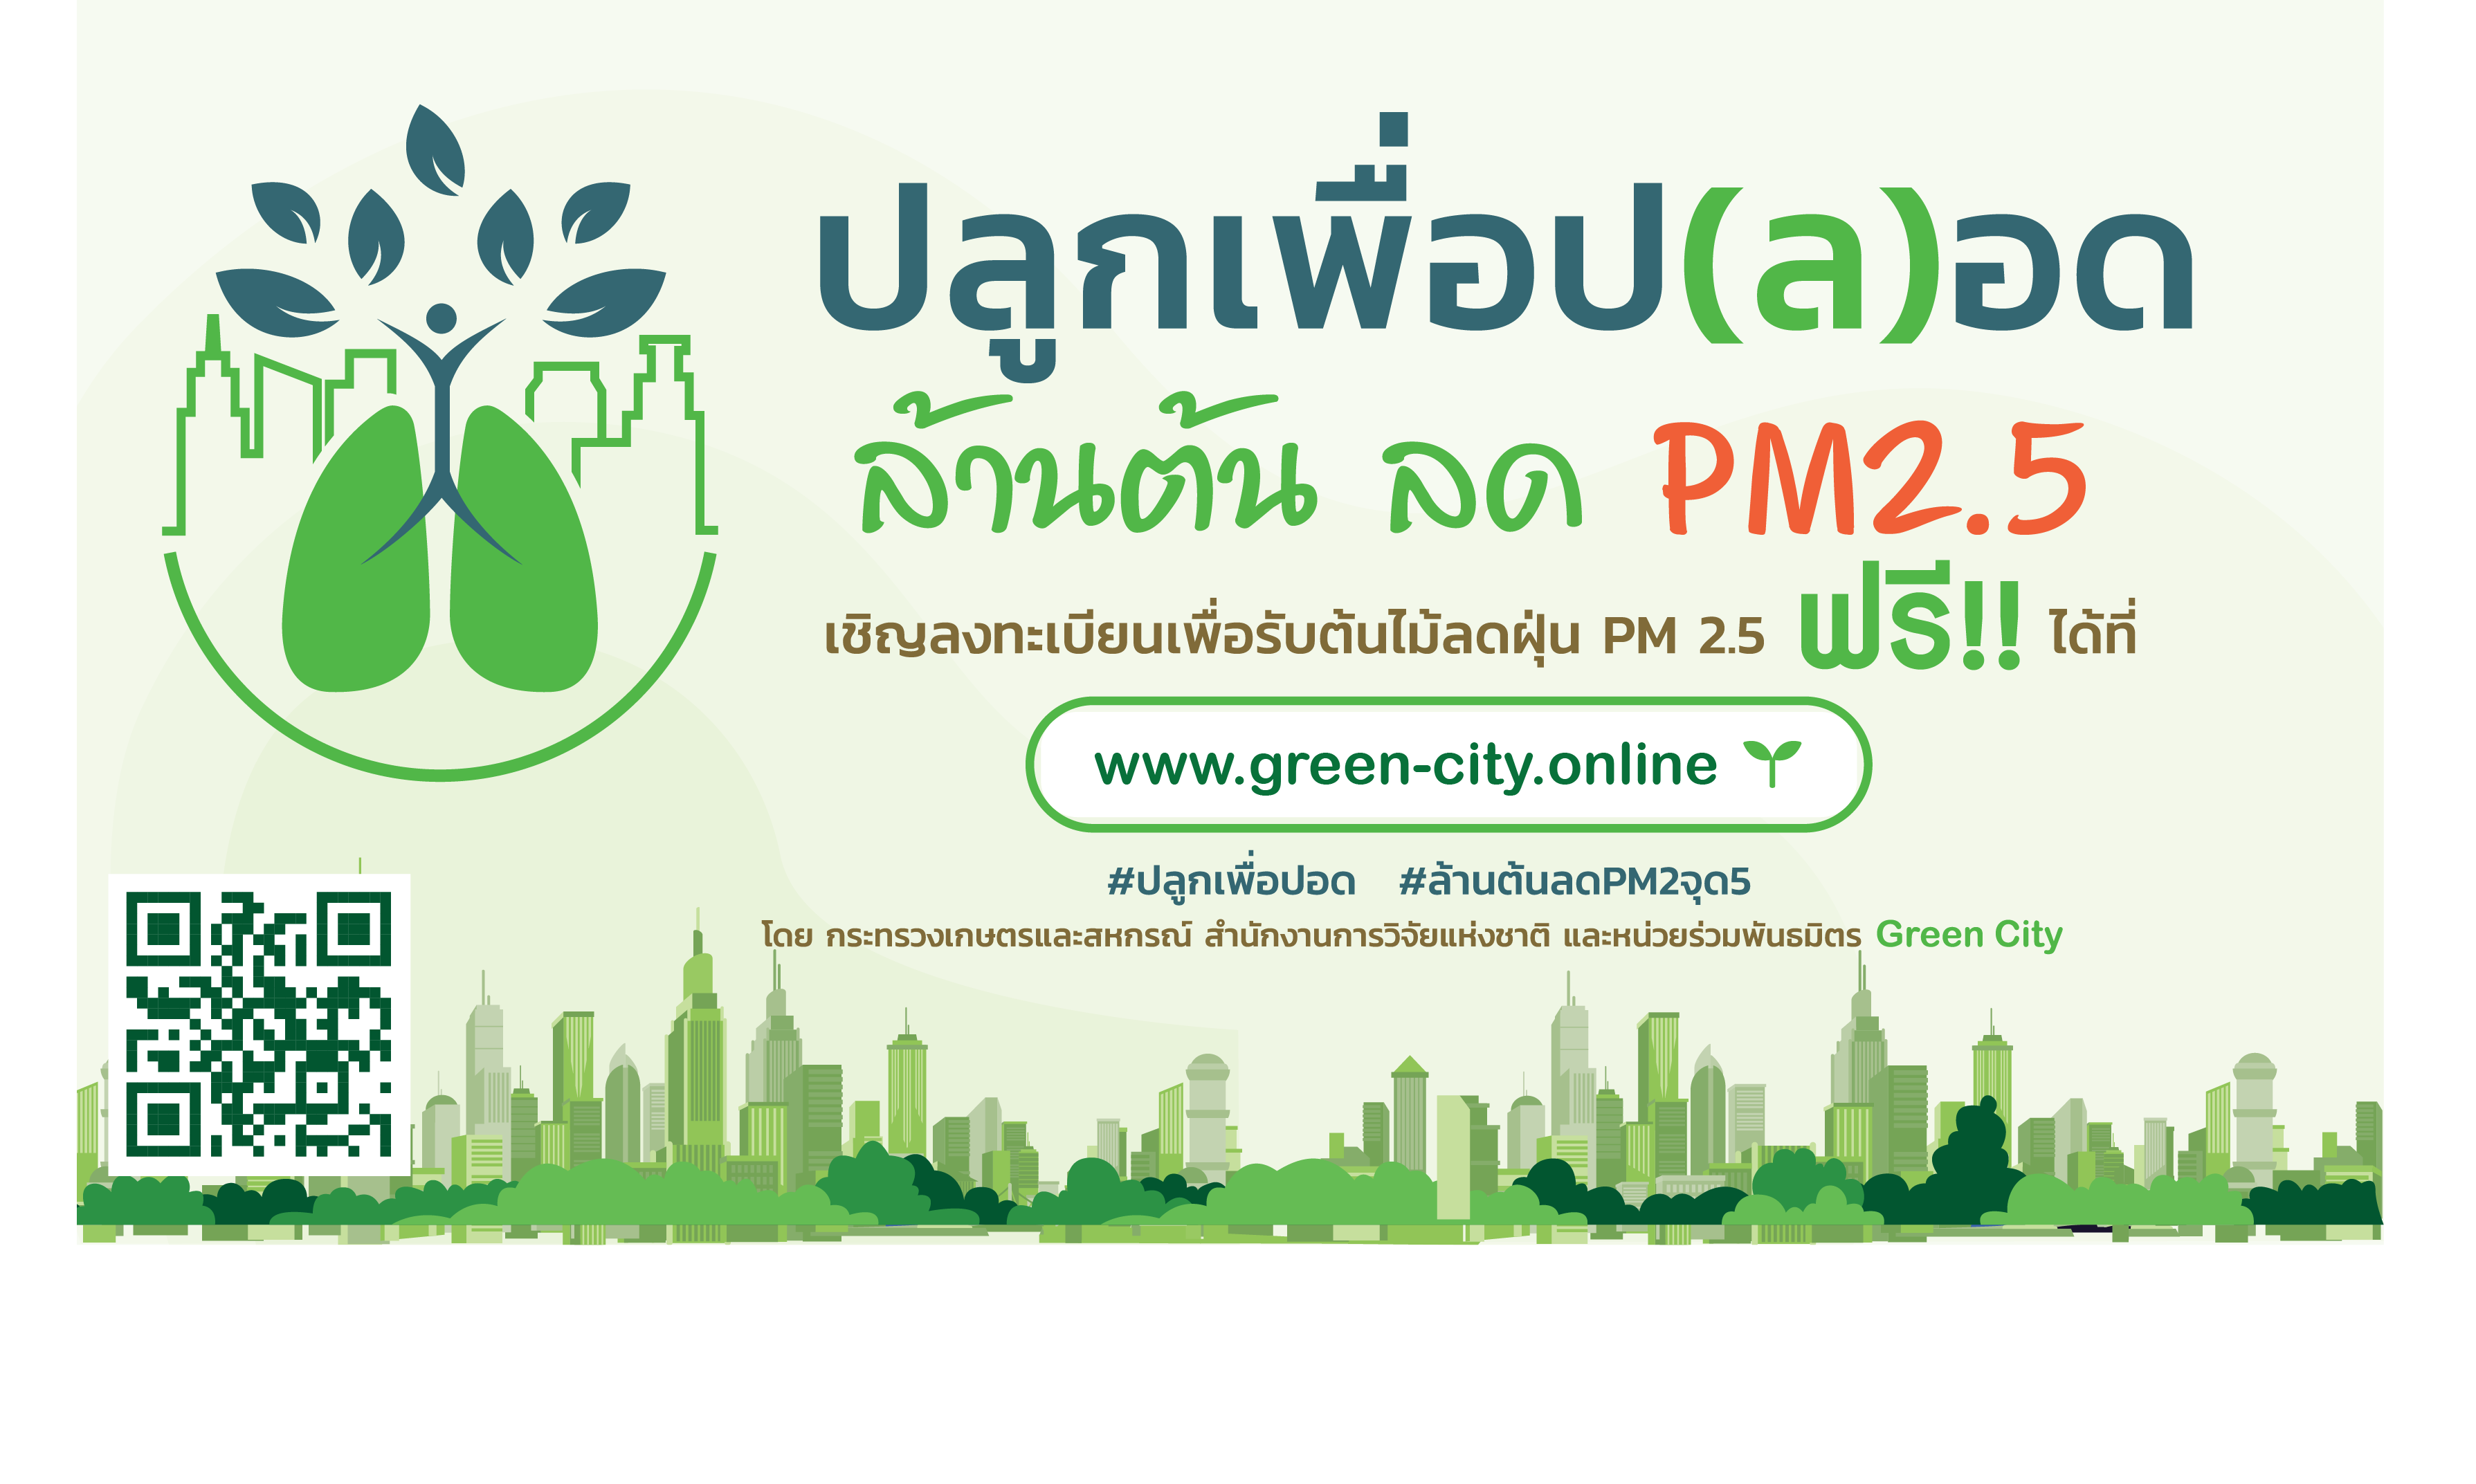 Green city